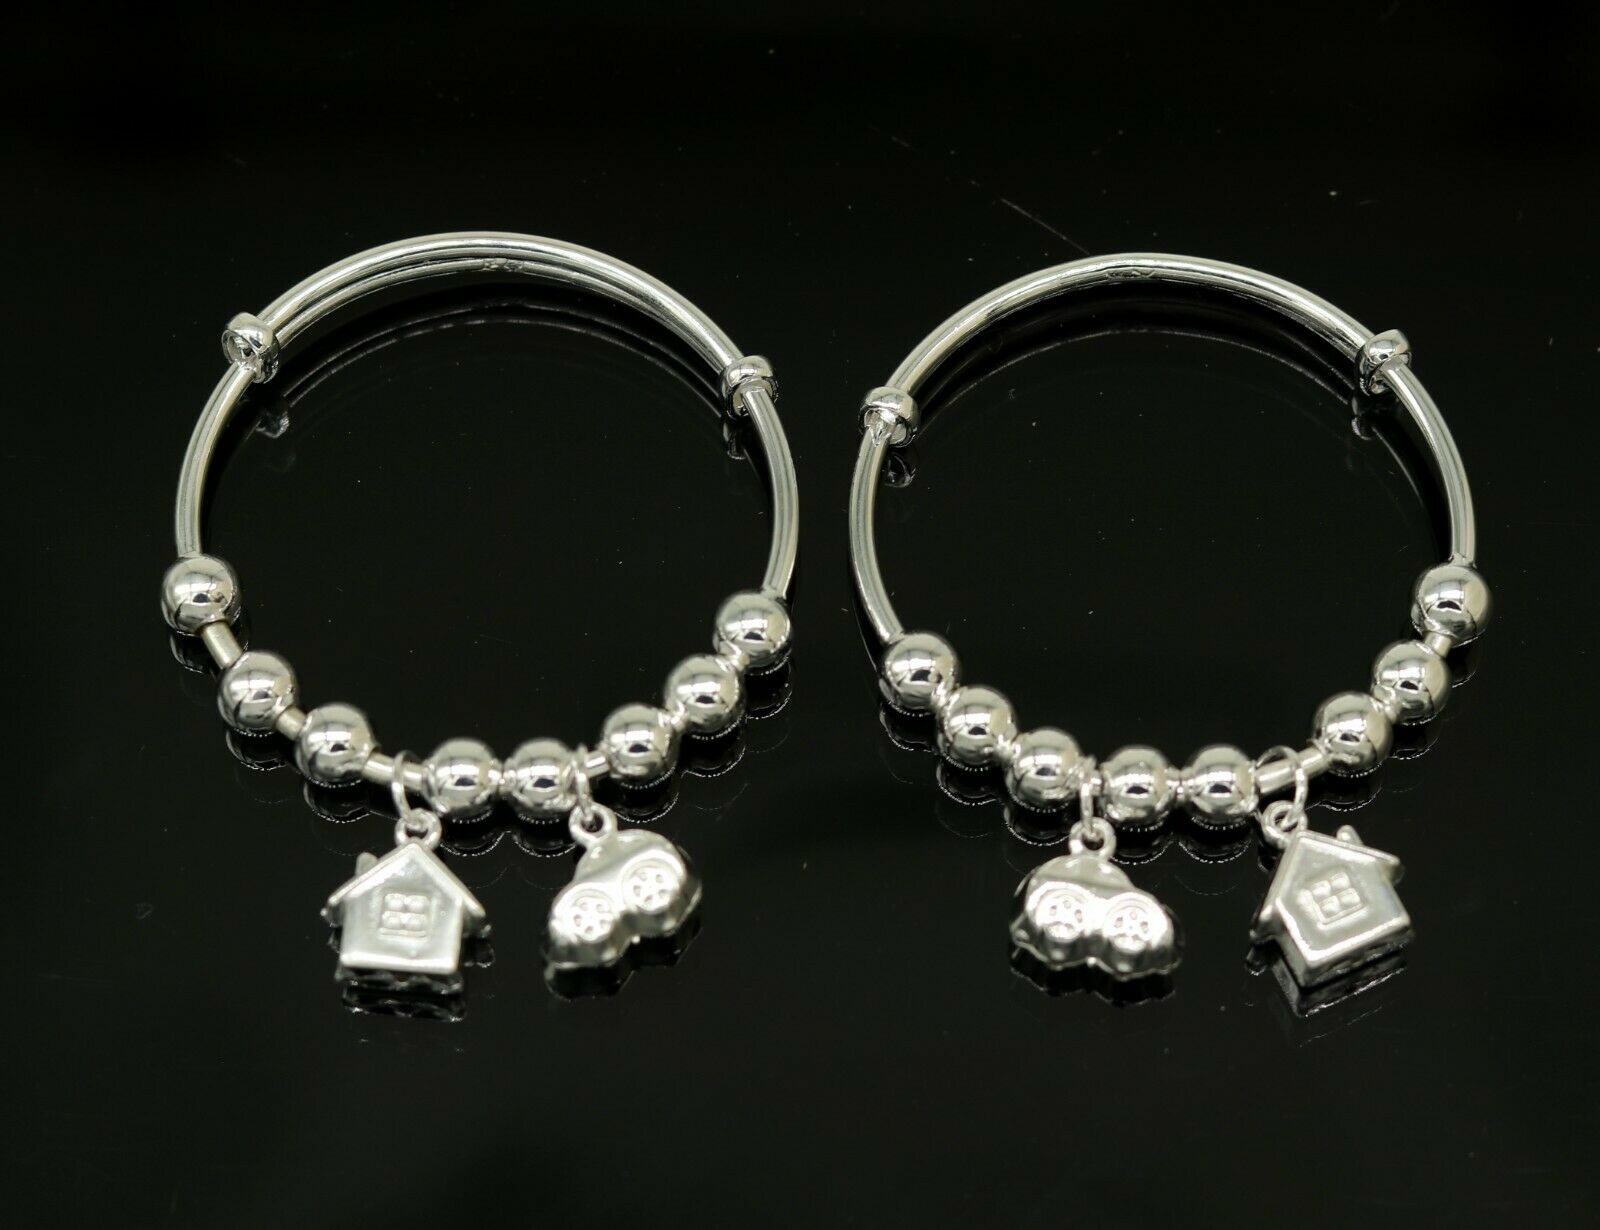 A Vintage 925 Sterling Silver Charm Bracelet with Heart … | Drouot.com